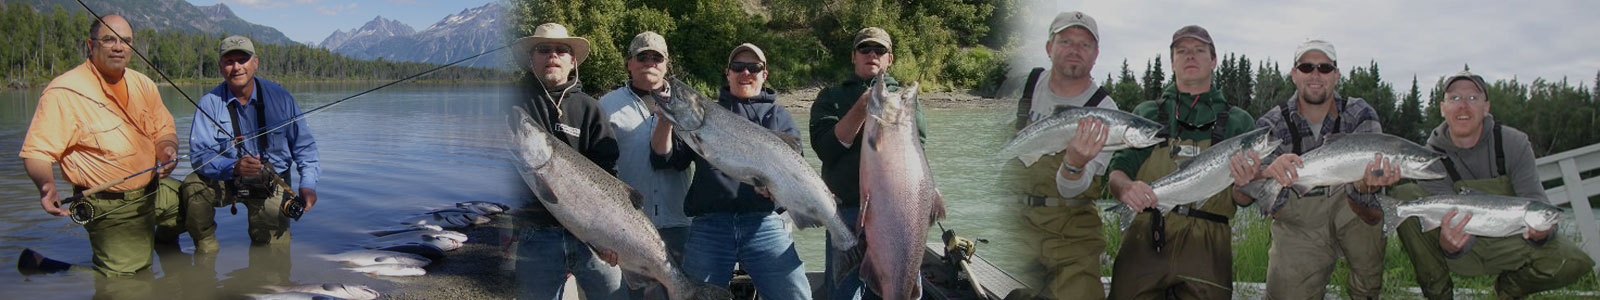 Alaska Guided Fishing Trip